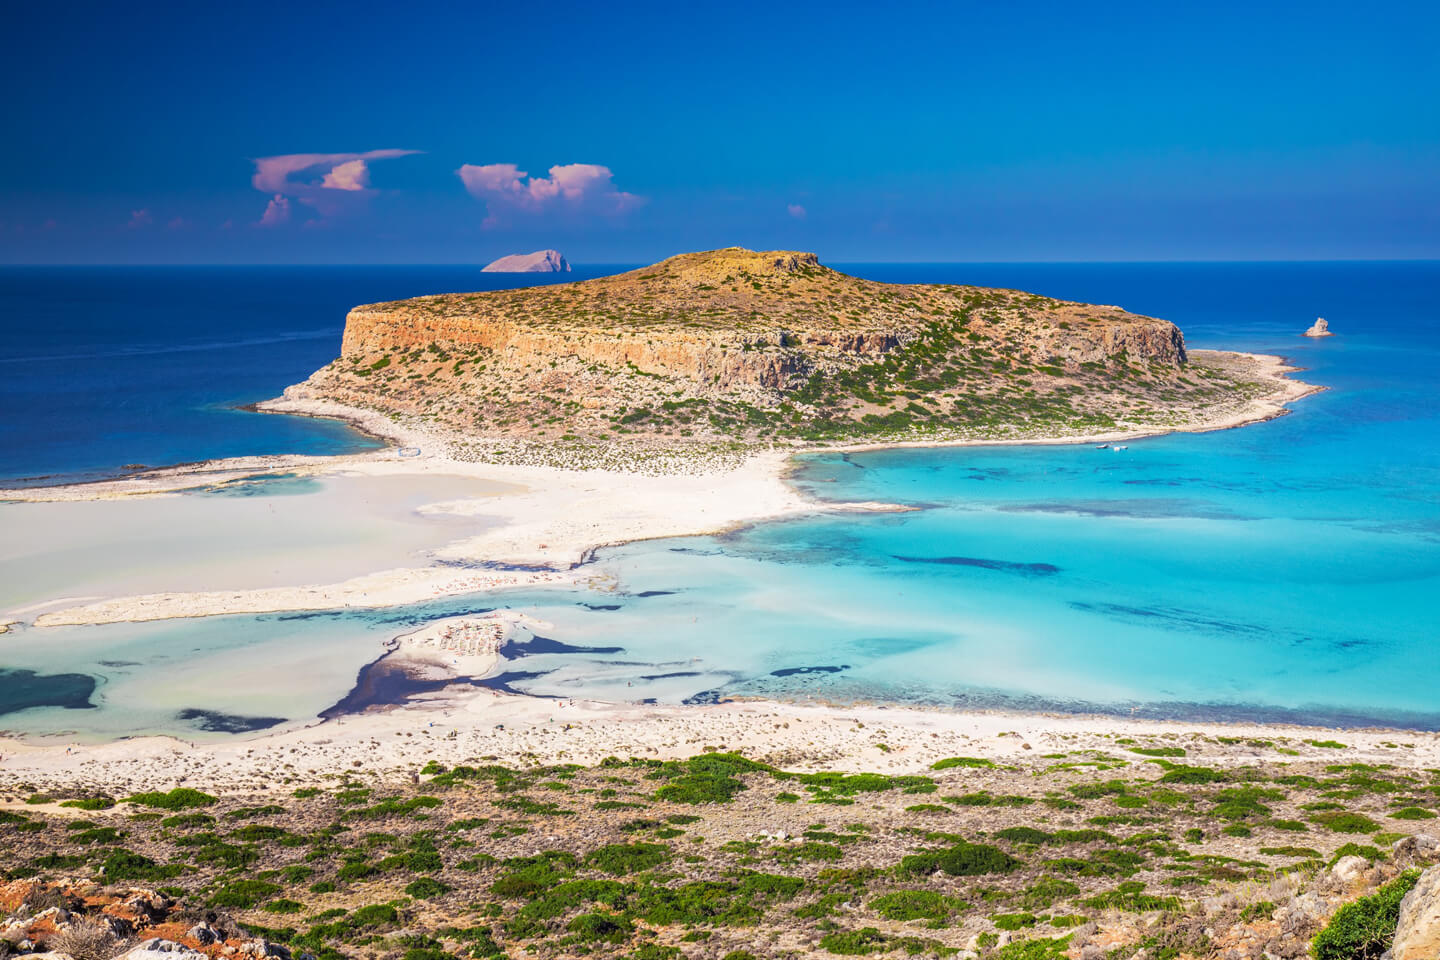 #6 The beaches of Cretes